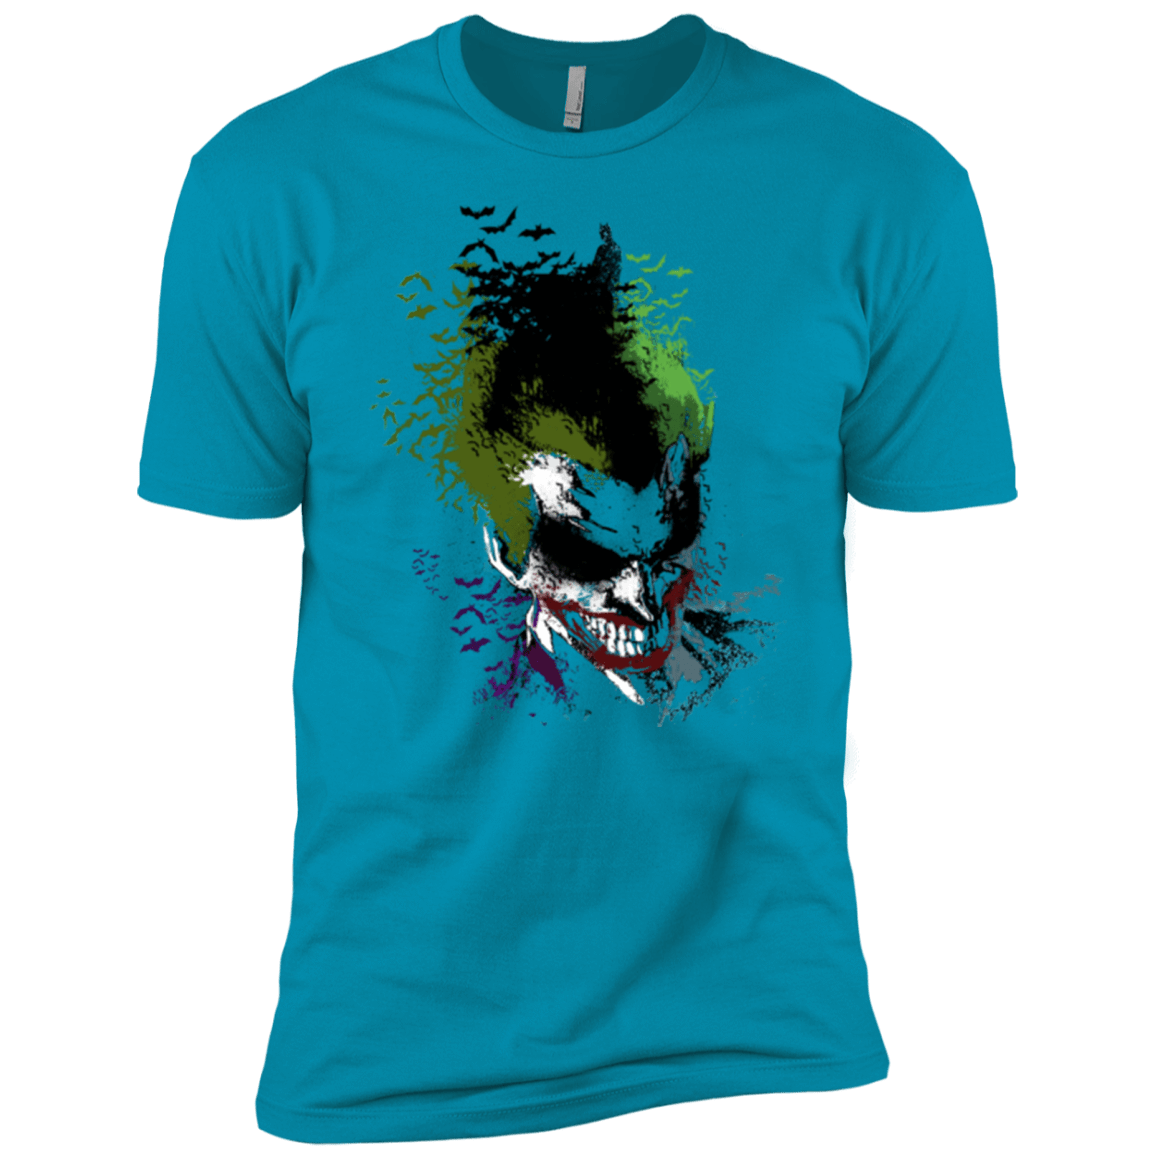 T-Shirts Turquoise / X-Small Joker 2 Men's Premium T-Shirt